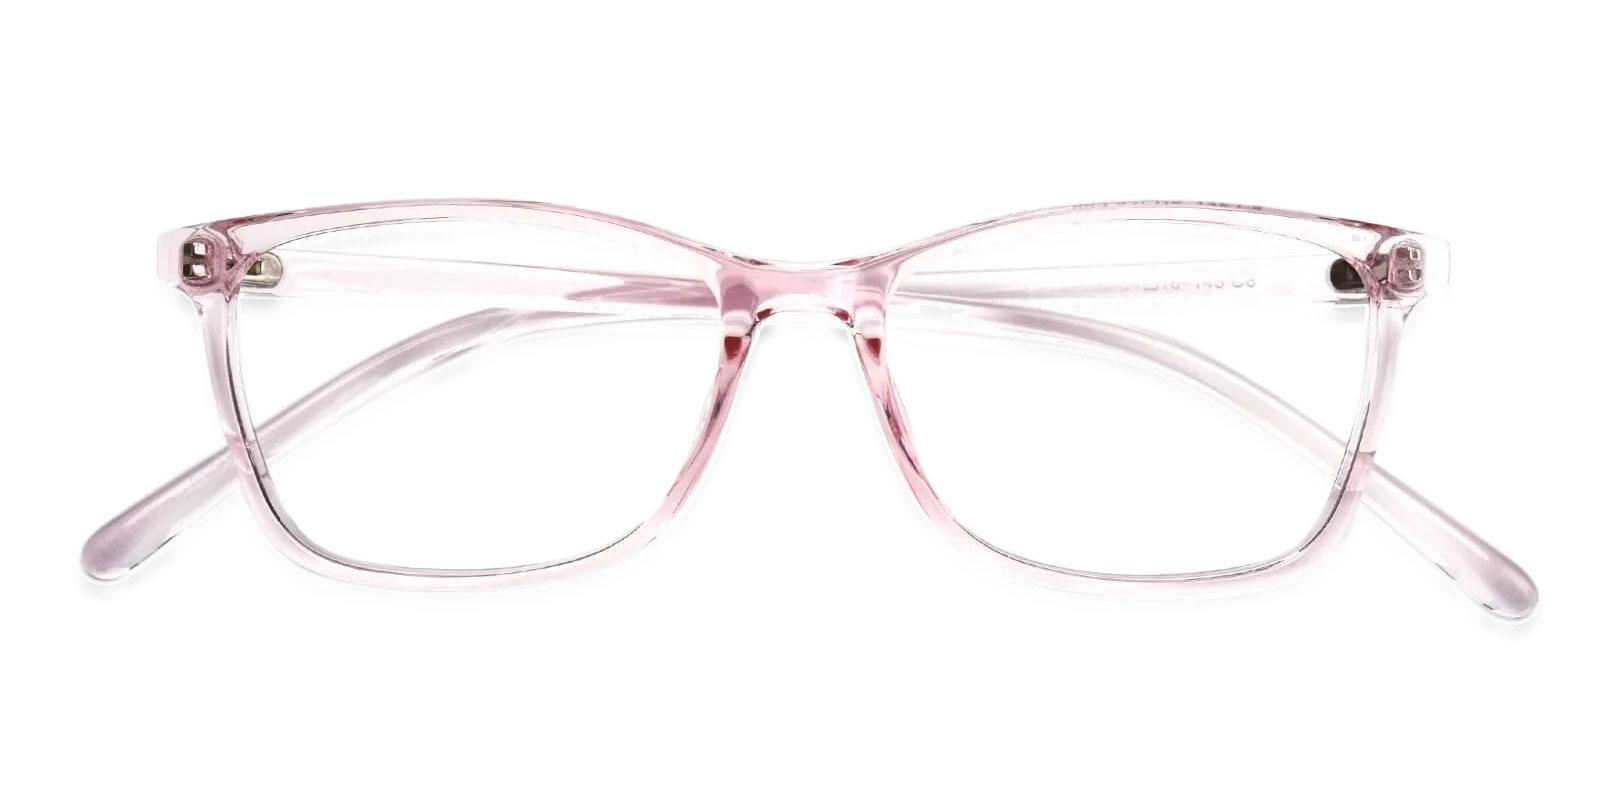 Marvel Pink TR Eyeglasses , UniversalBridgeFit , Lightweight Frames from ABBE Glasses